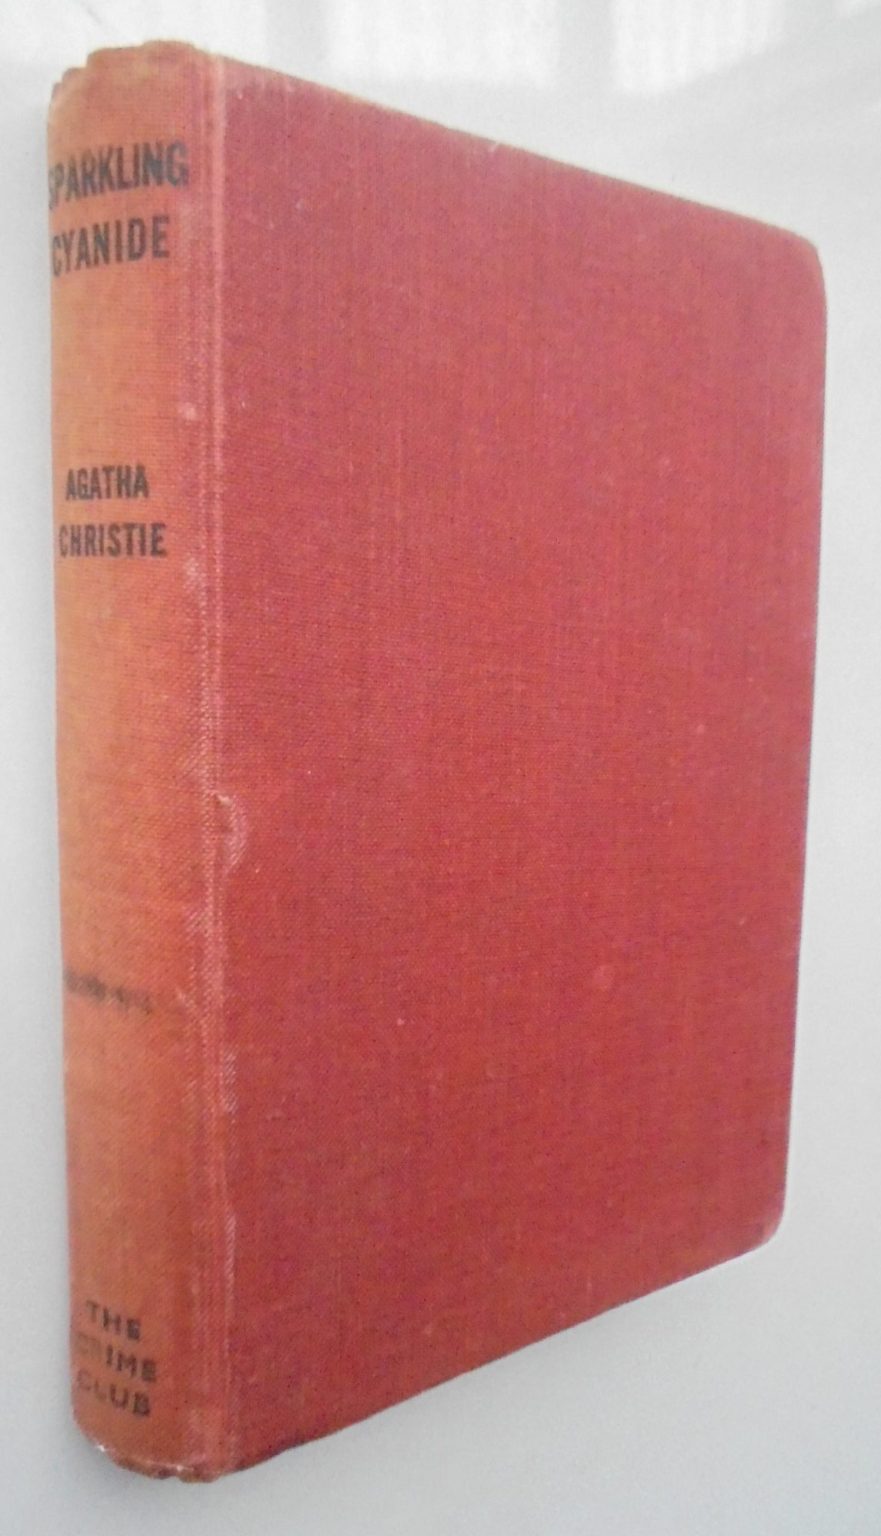 Sparkling Cyanide. 1945 First NZ Edition. By Agatha Christie